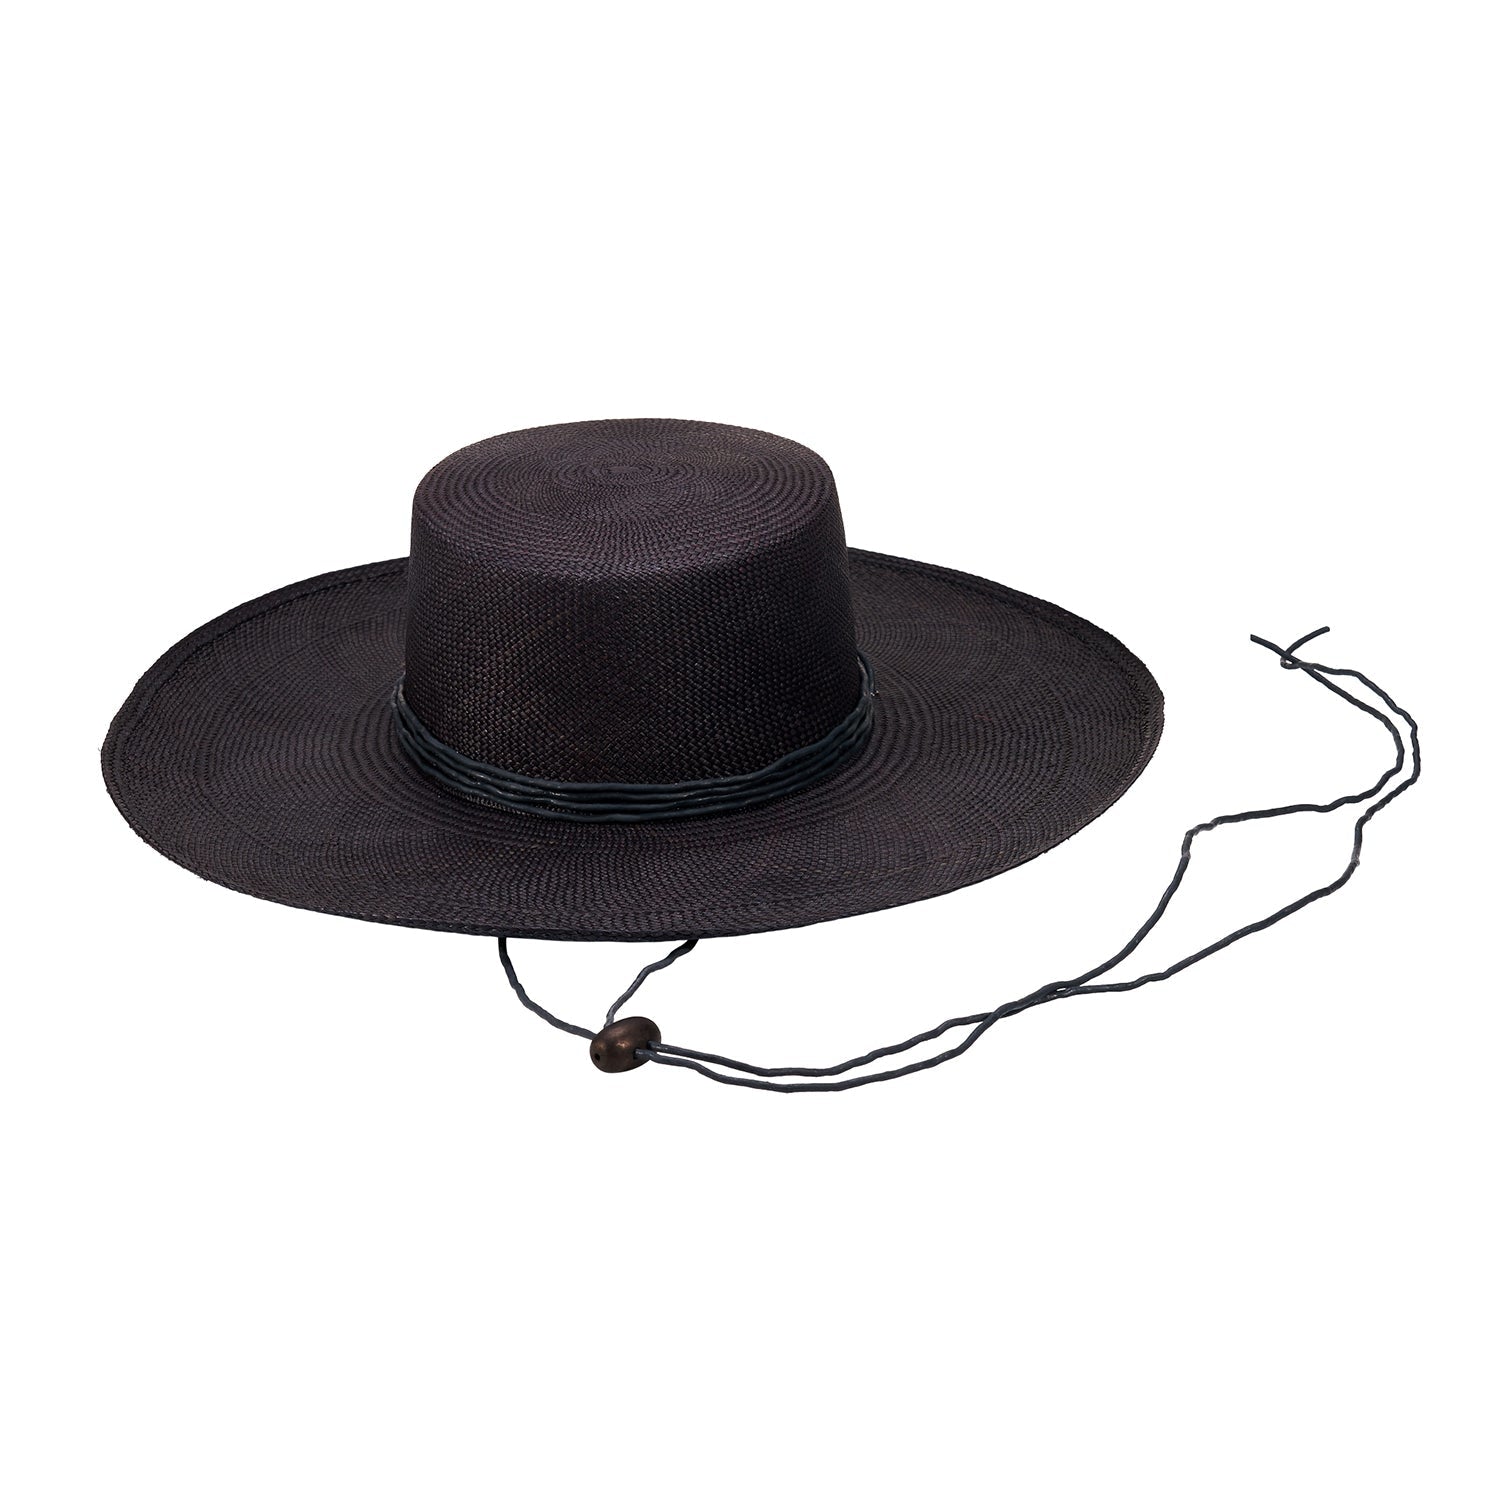 Jacaranda - Hat artesano